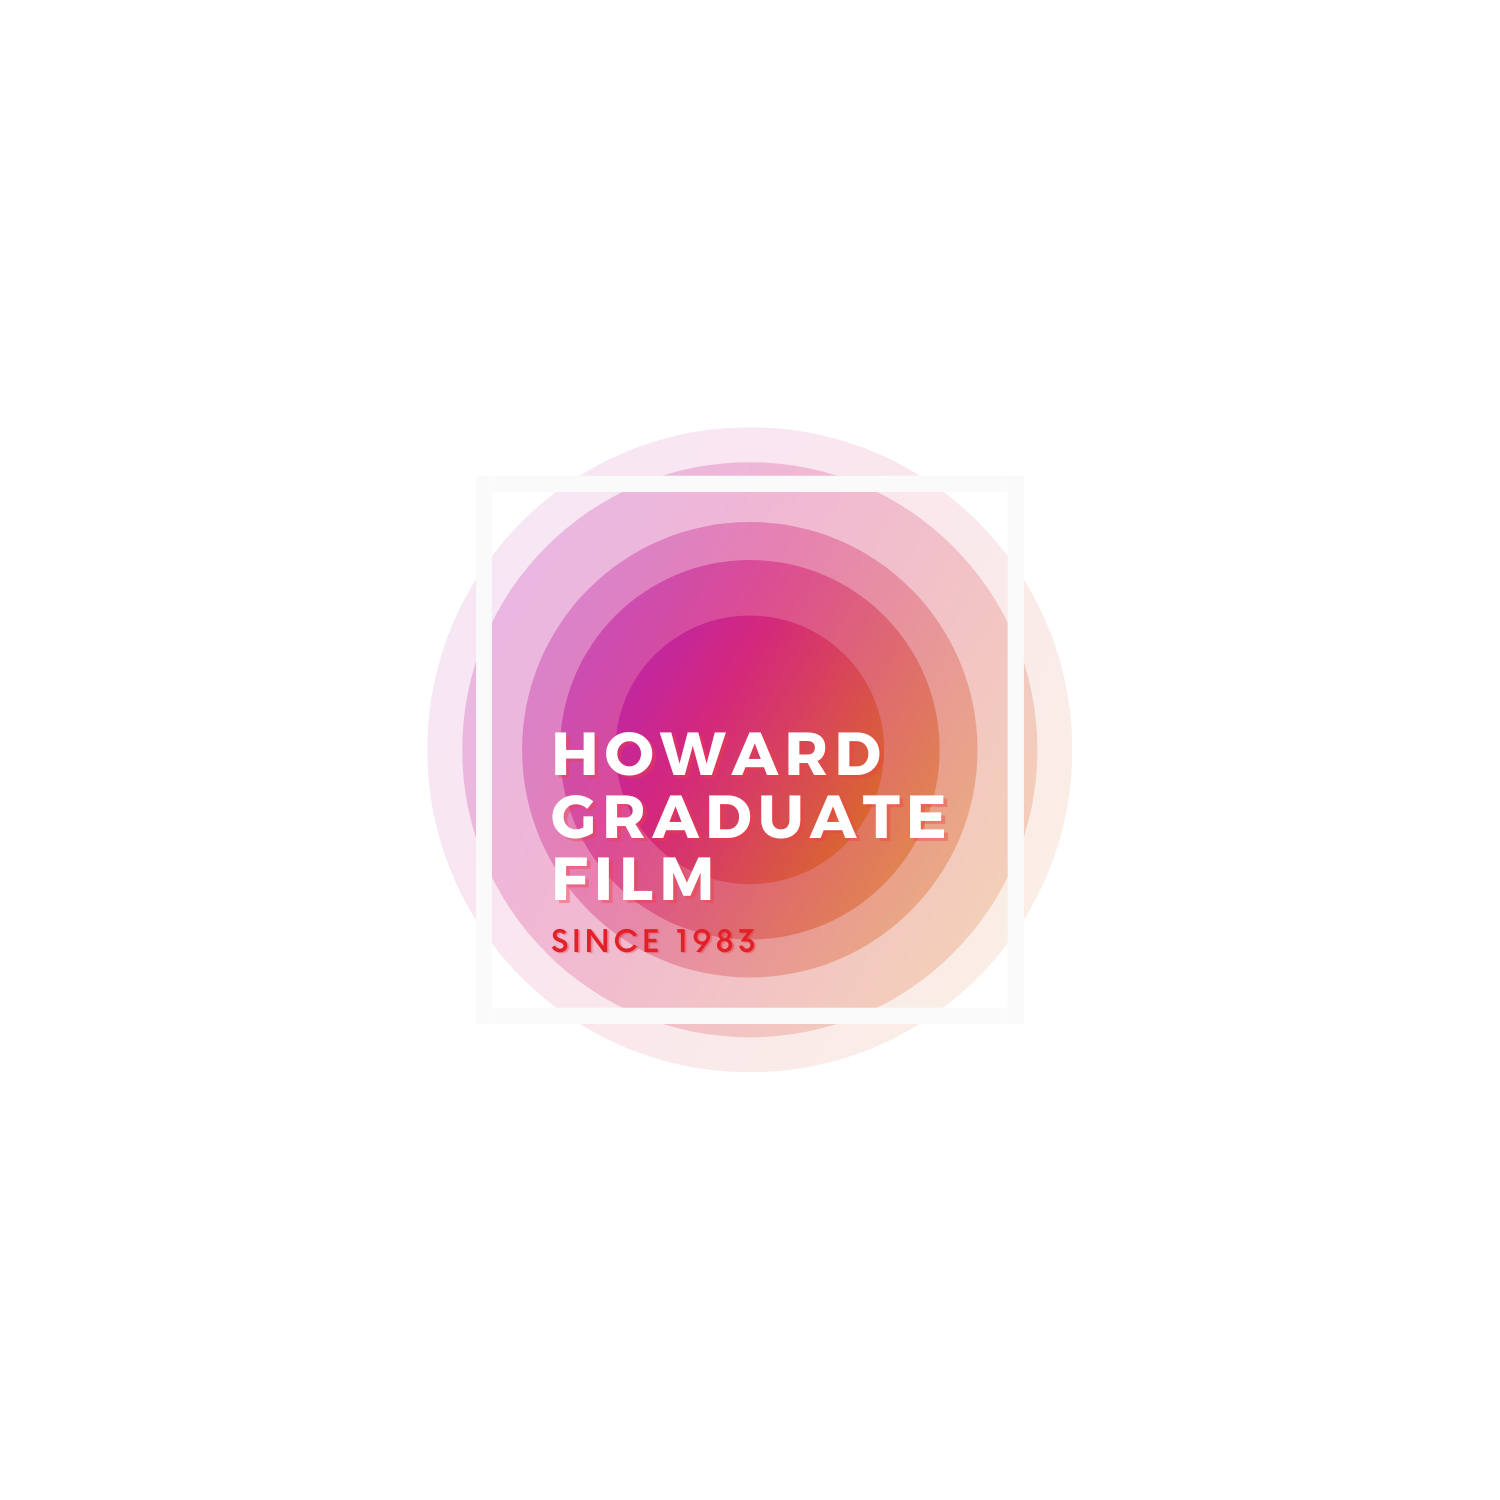 Howard Graduate Film